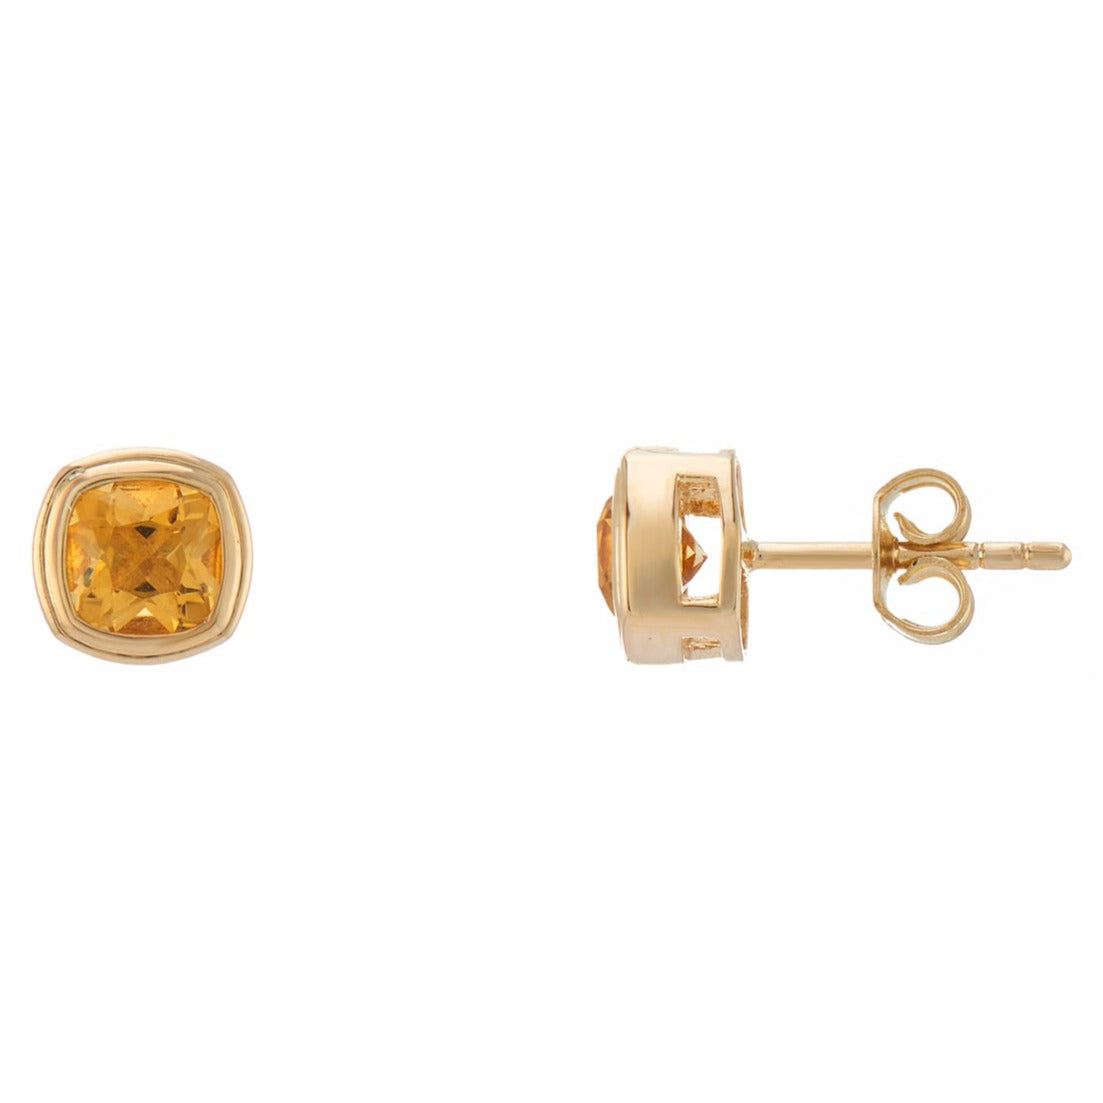 9ct gold 5mm cushion shape rub over set citrine stud earrings